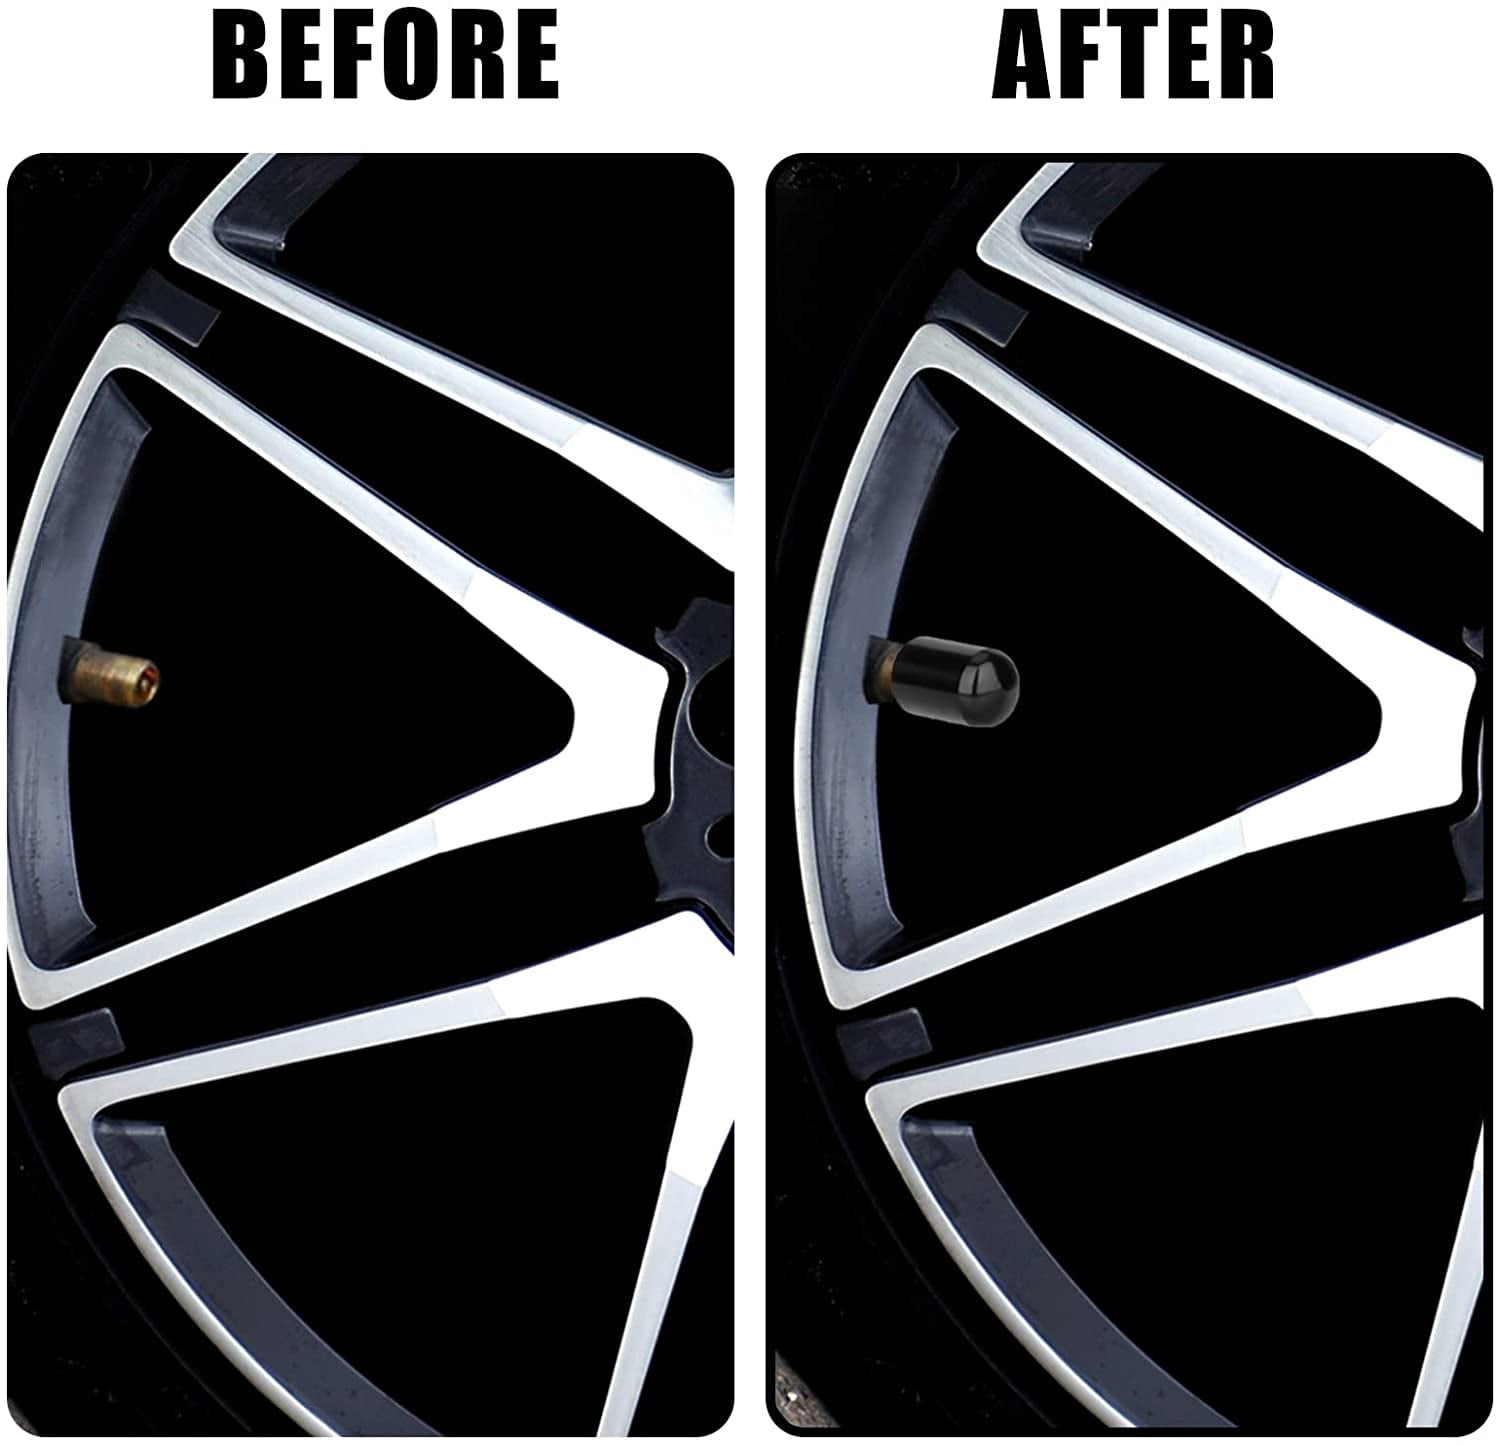 Details about   4pcs Auto Bicycle Tire Valve Caps Dust Covers for Schrader Valve US 